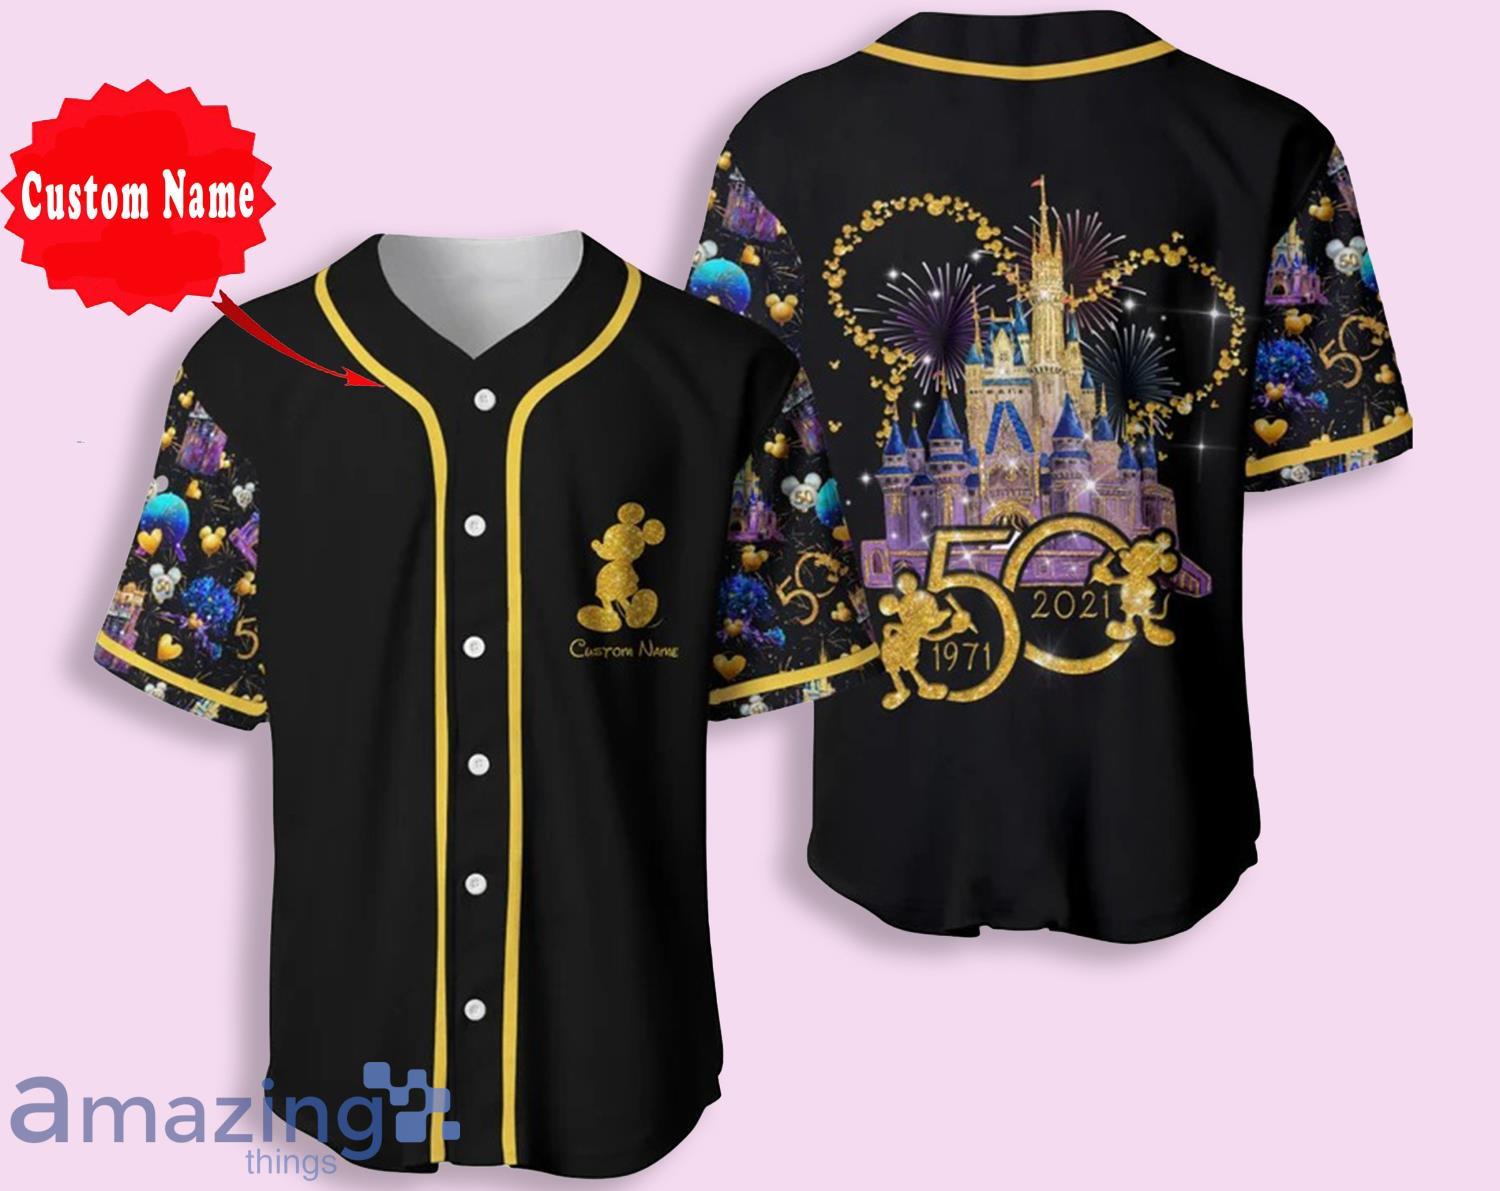 Mickey Fantasia Disney Cartoon Custom Name And Number Baseball Jersey –